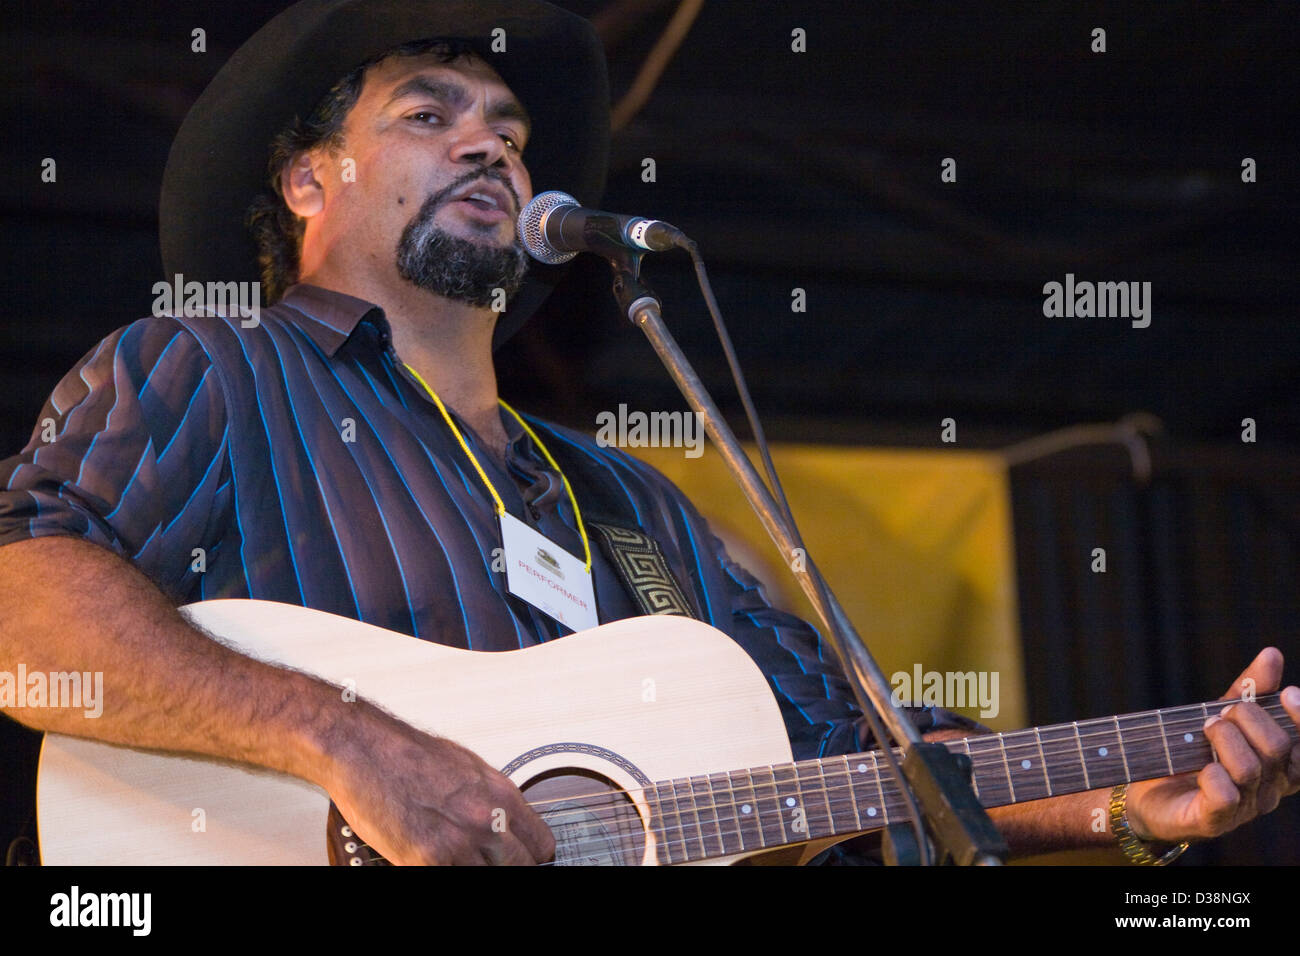 Peter Brandy, 2009 Indigenous Music Artist of the Year for Western Australia, at the Barramundi Concert, Australia Stock Photo